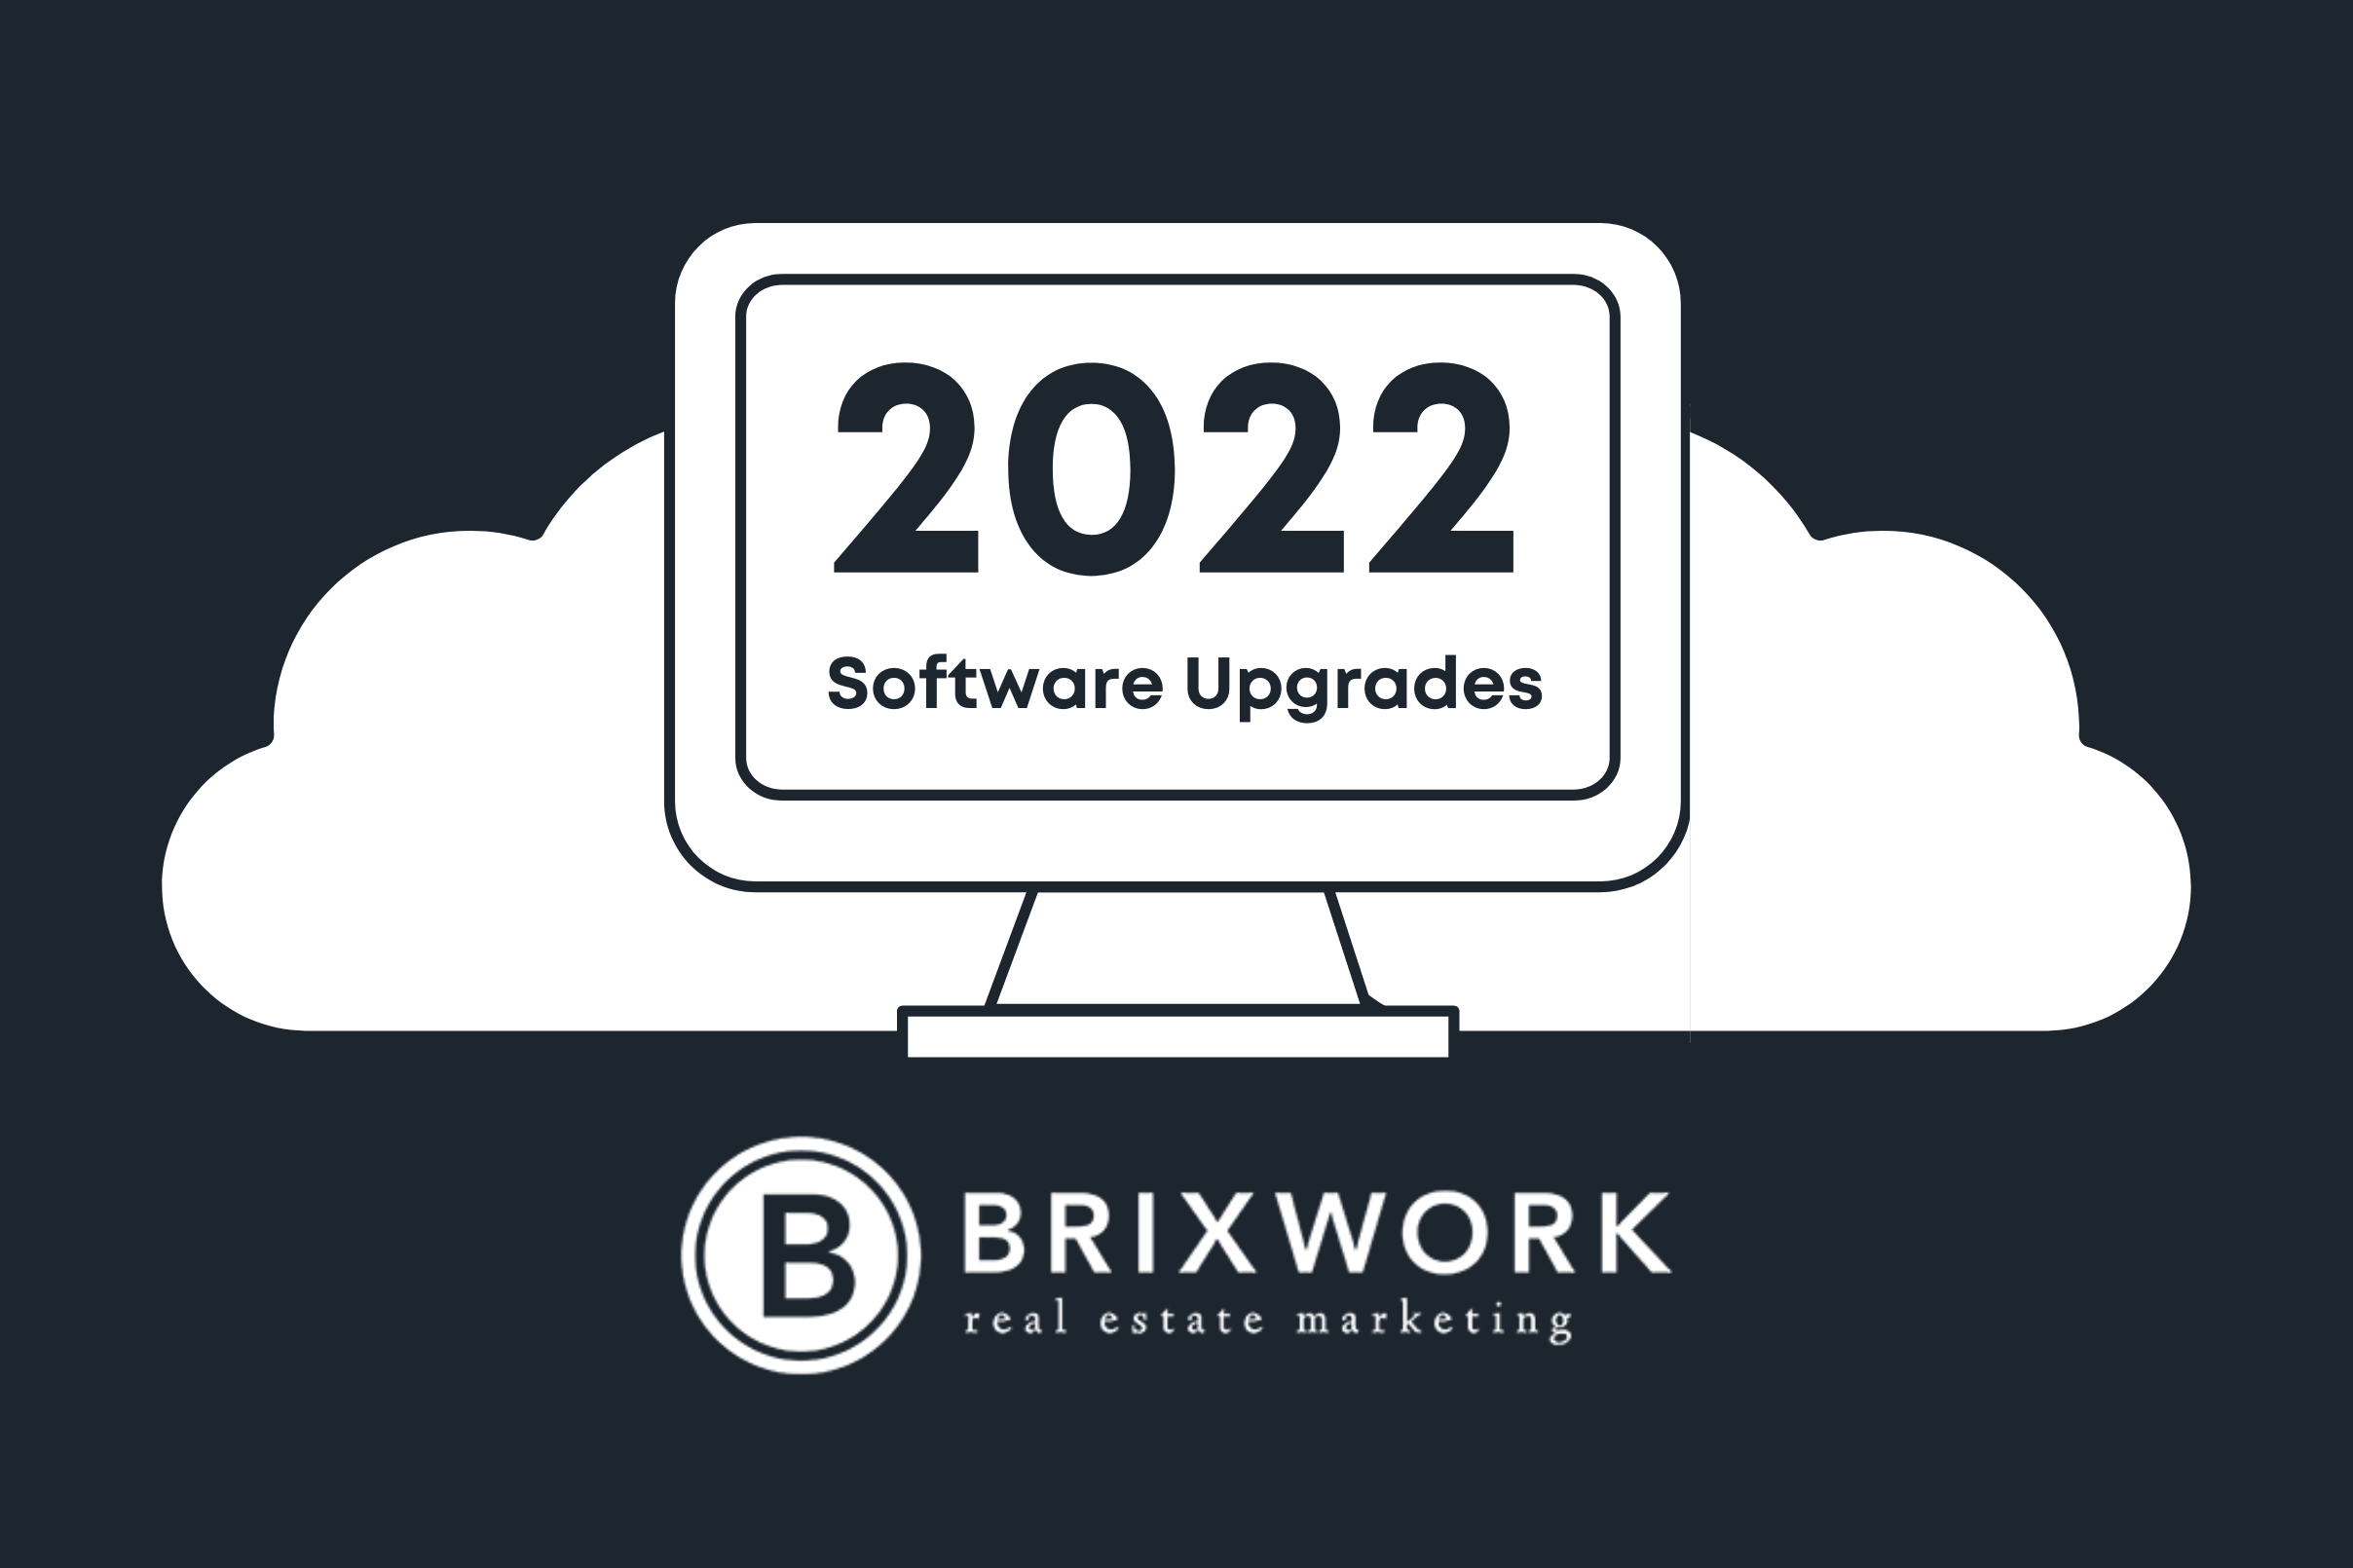 Brixwork 2022 Software Upgrades